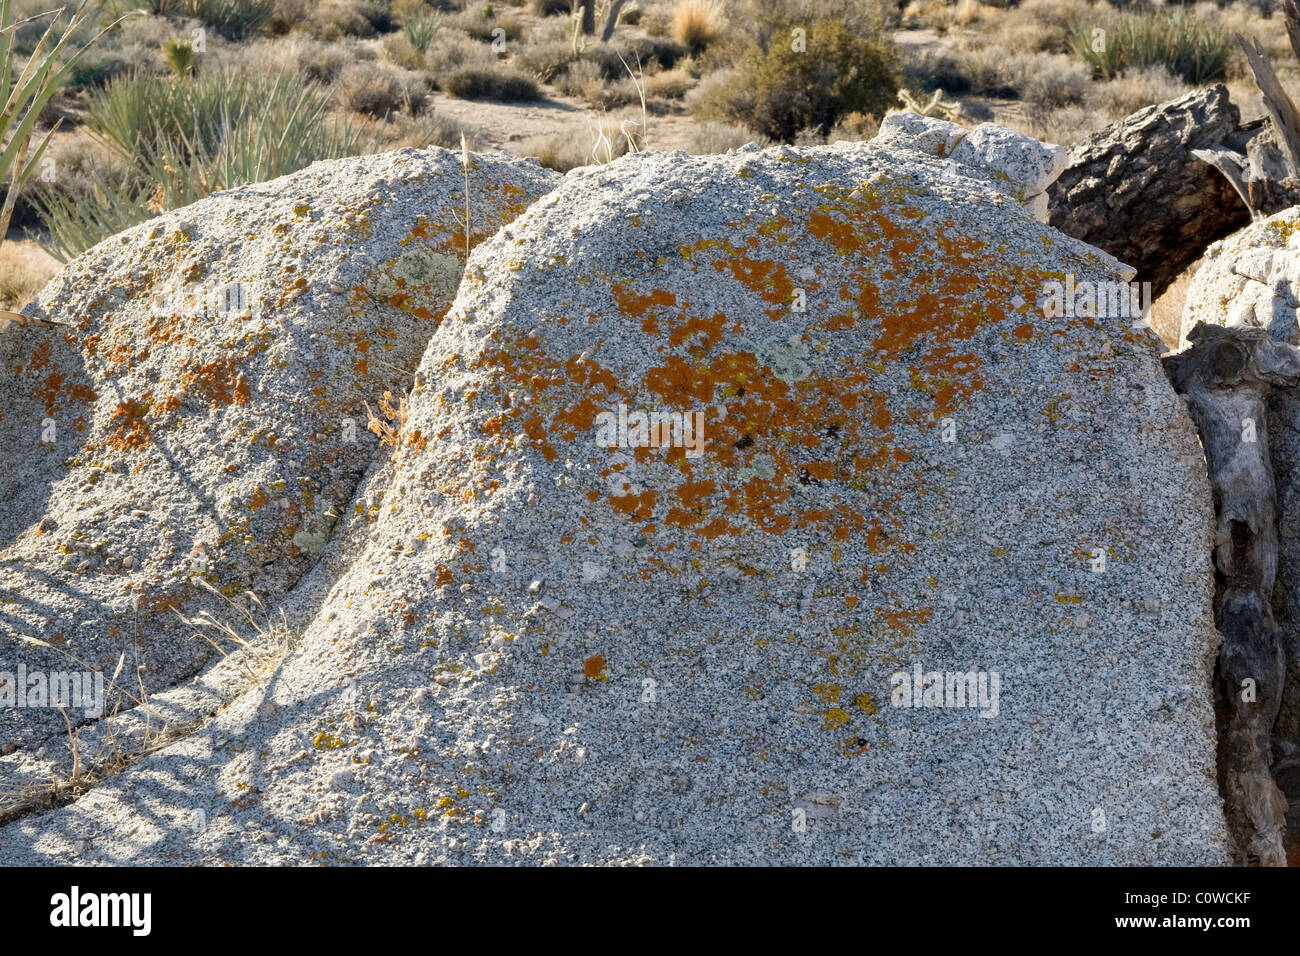 Crustose lichens on a rock in the Mojave Desert, California. Stock Photo